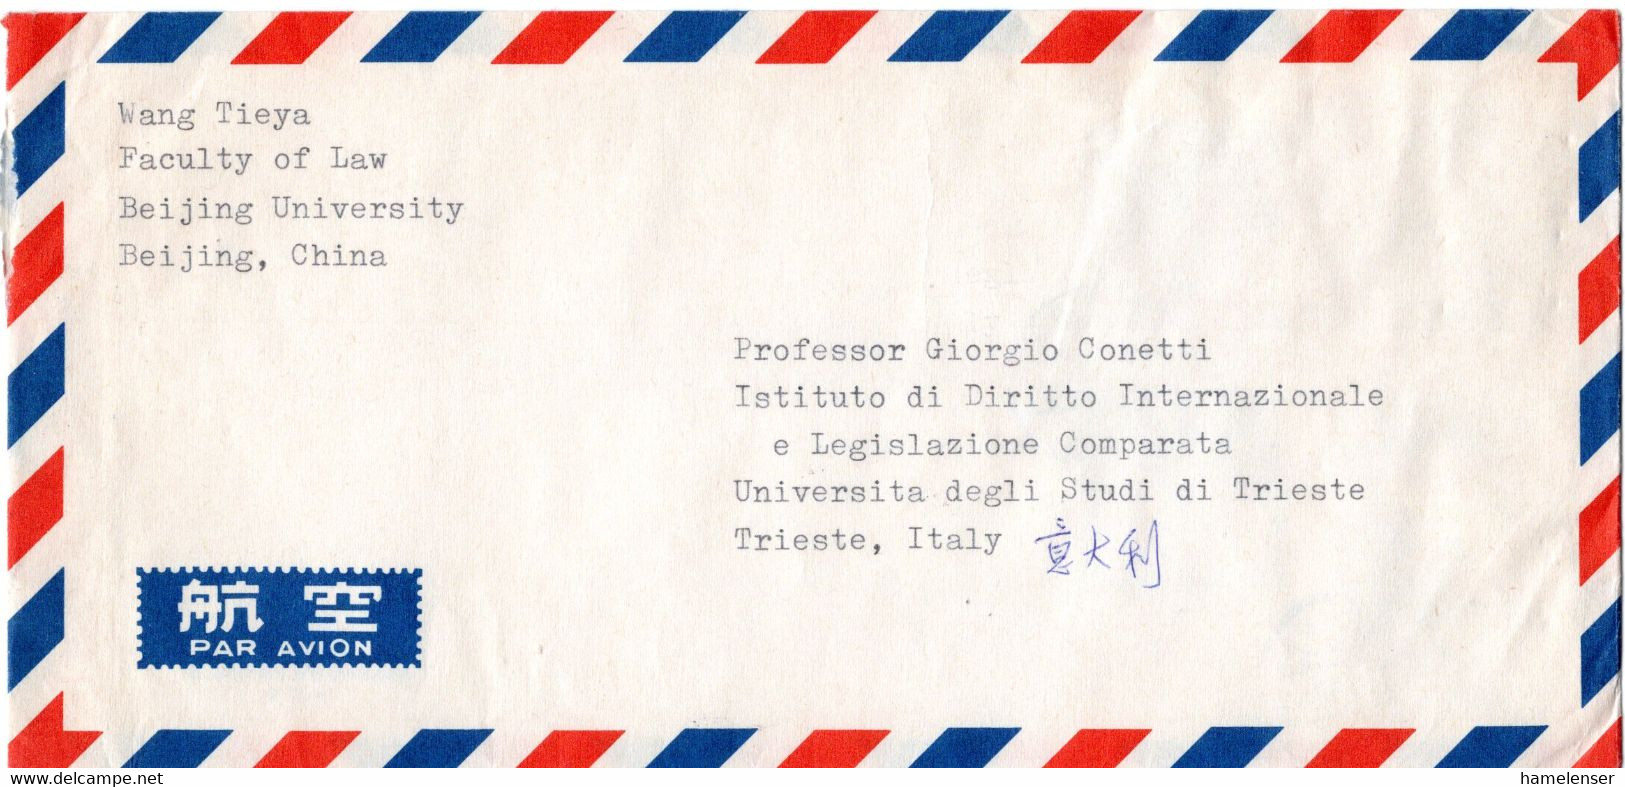 L34322 - VR China - 1981 - 2@40f Wirtschaft MiF A LpBf BEIJING -> Italien - Storia Postale